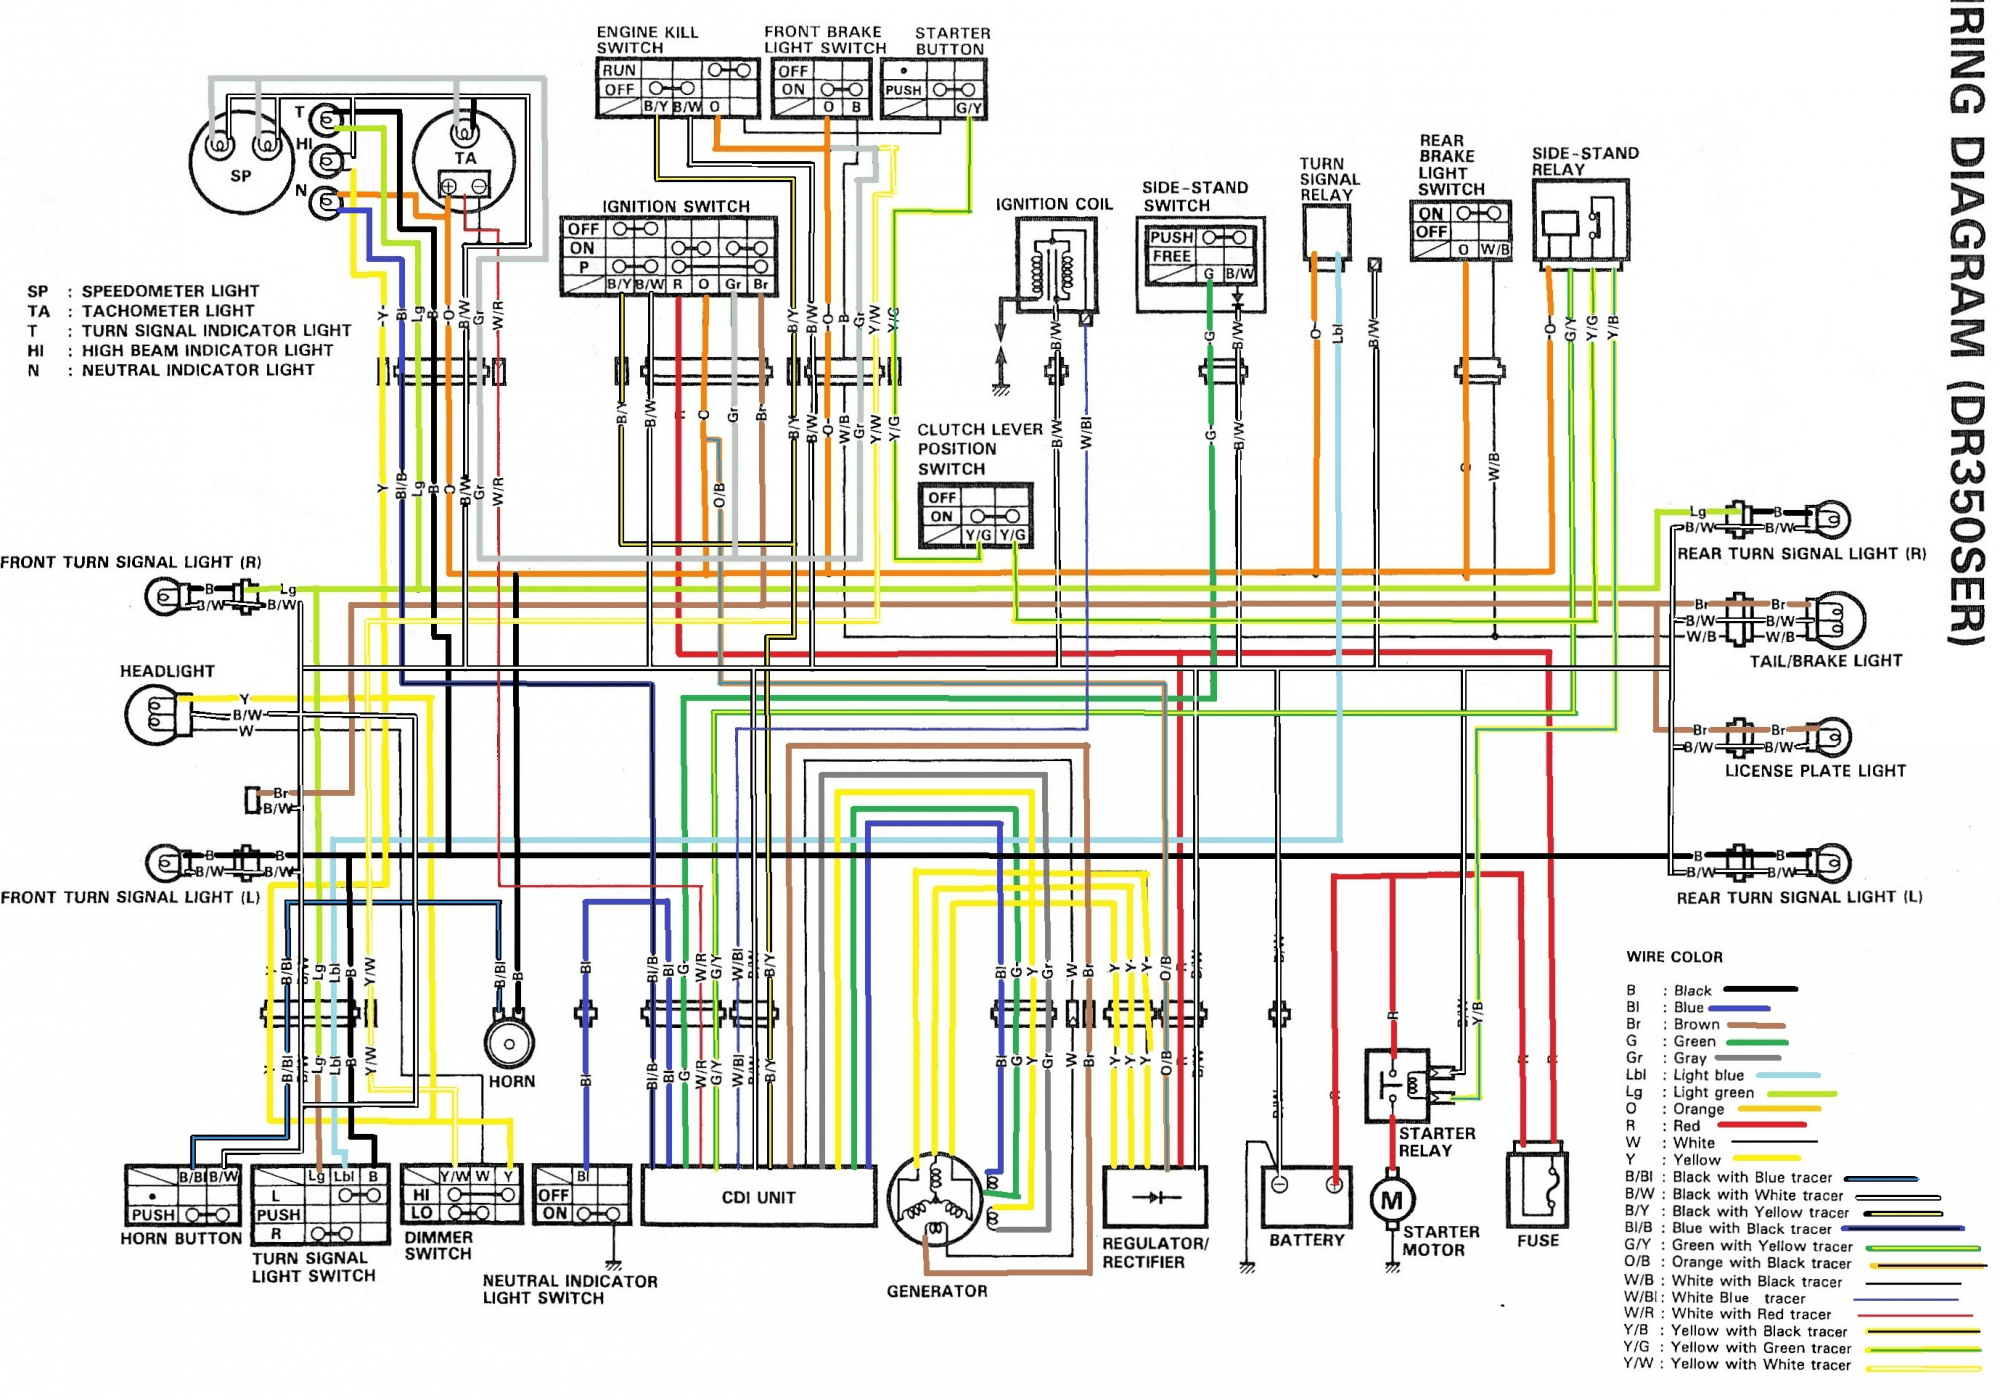 E C M Wiring Diagram Ddec 2